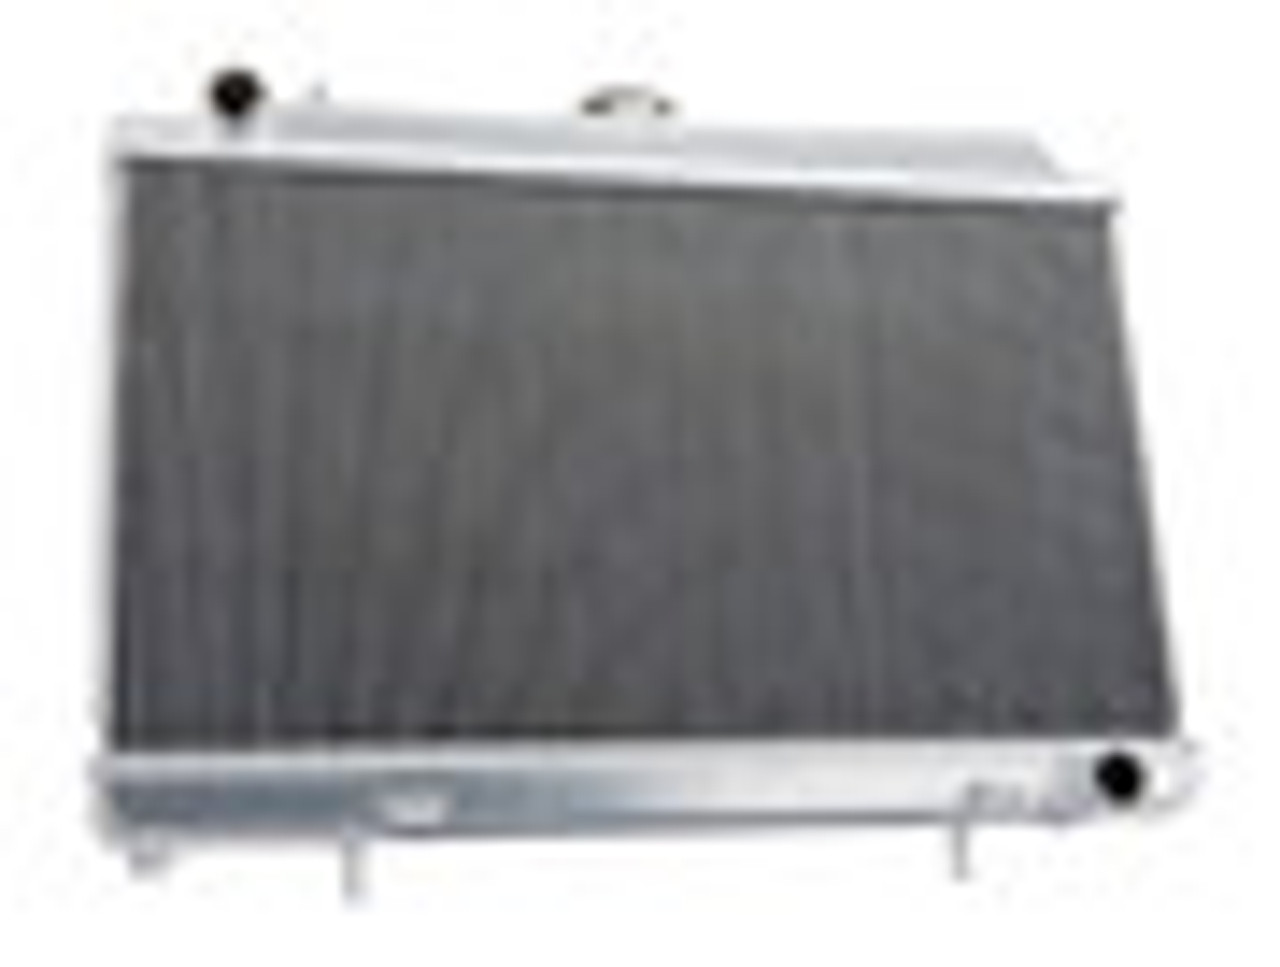 ISR Aluminum Radiator for your Nissan 240sx 95-98 w/ SR20DET. High quality aluminum.
1x Radiator